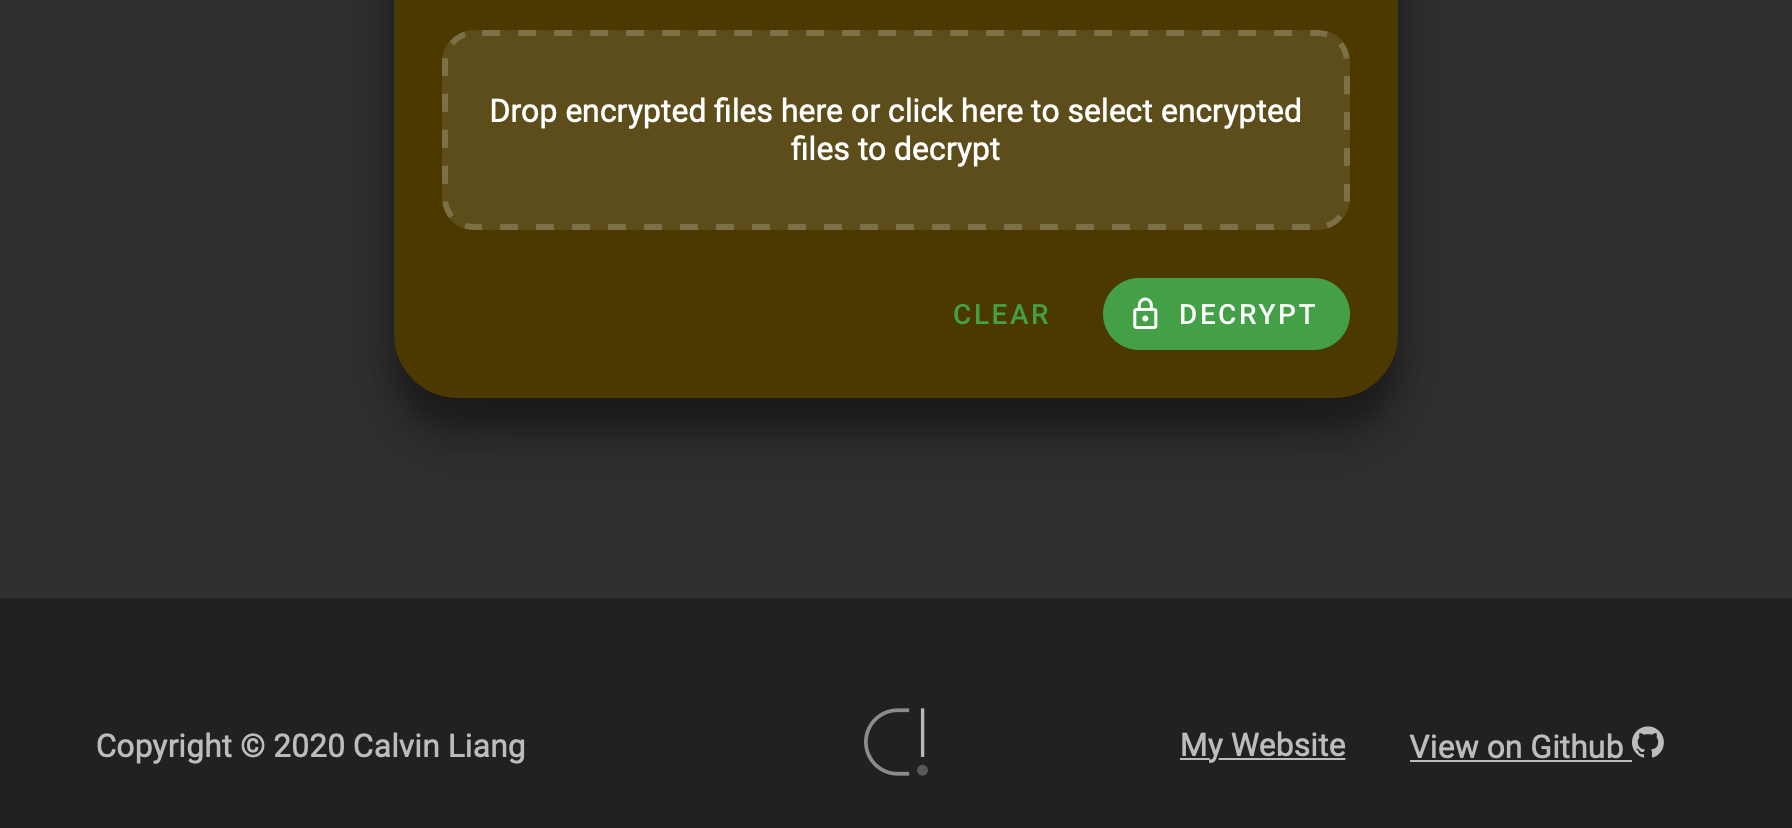 main-test-ts-encrypt-decrypt-decrypt-page-file-decryption-screenshot-896-414-1-snap.png